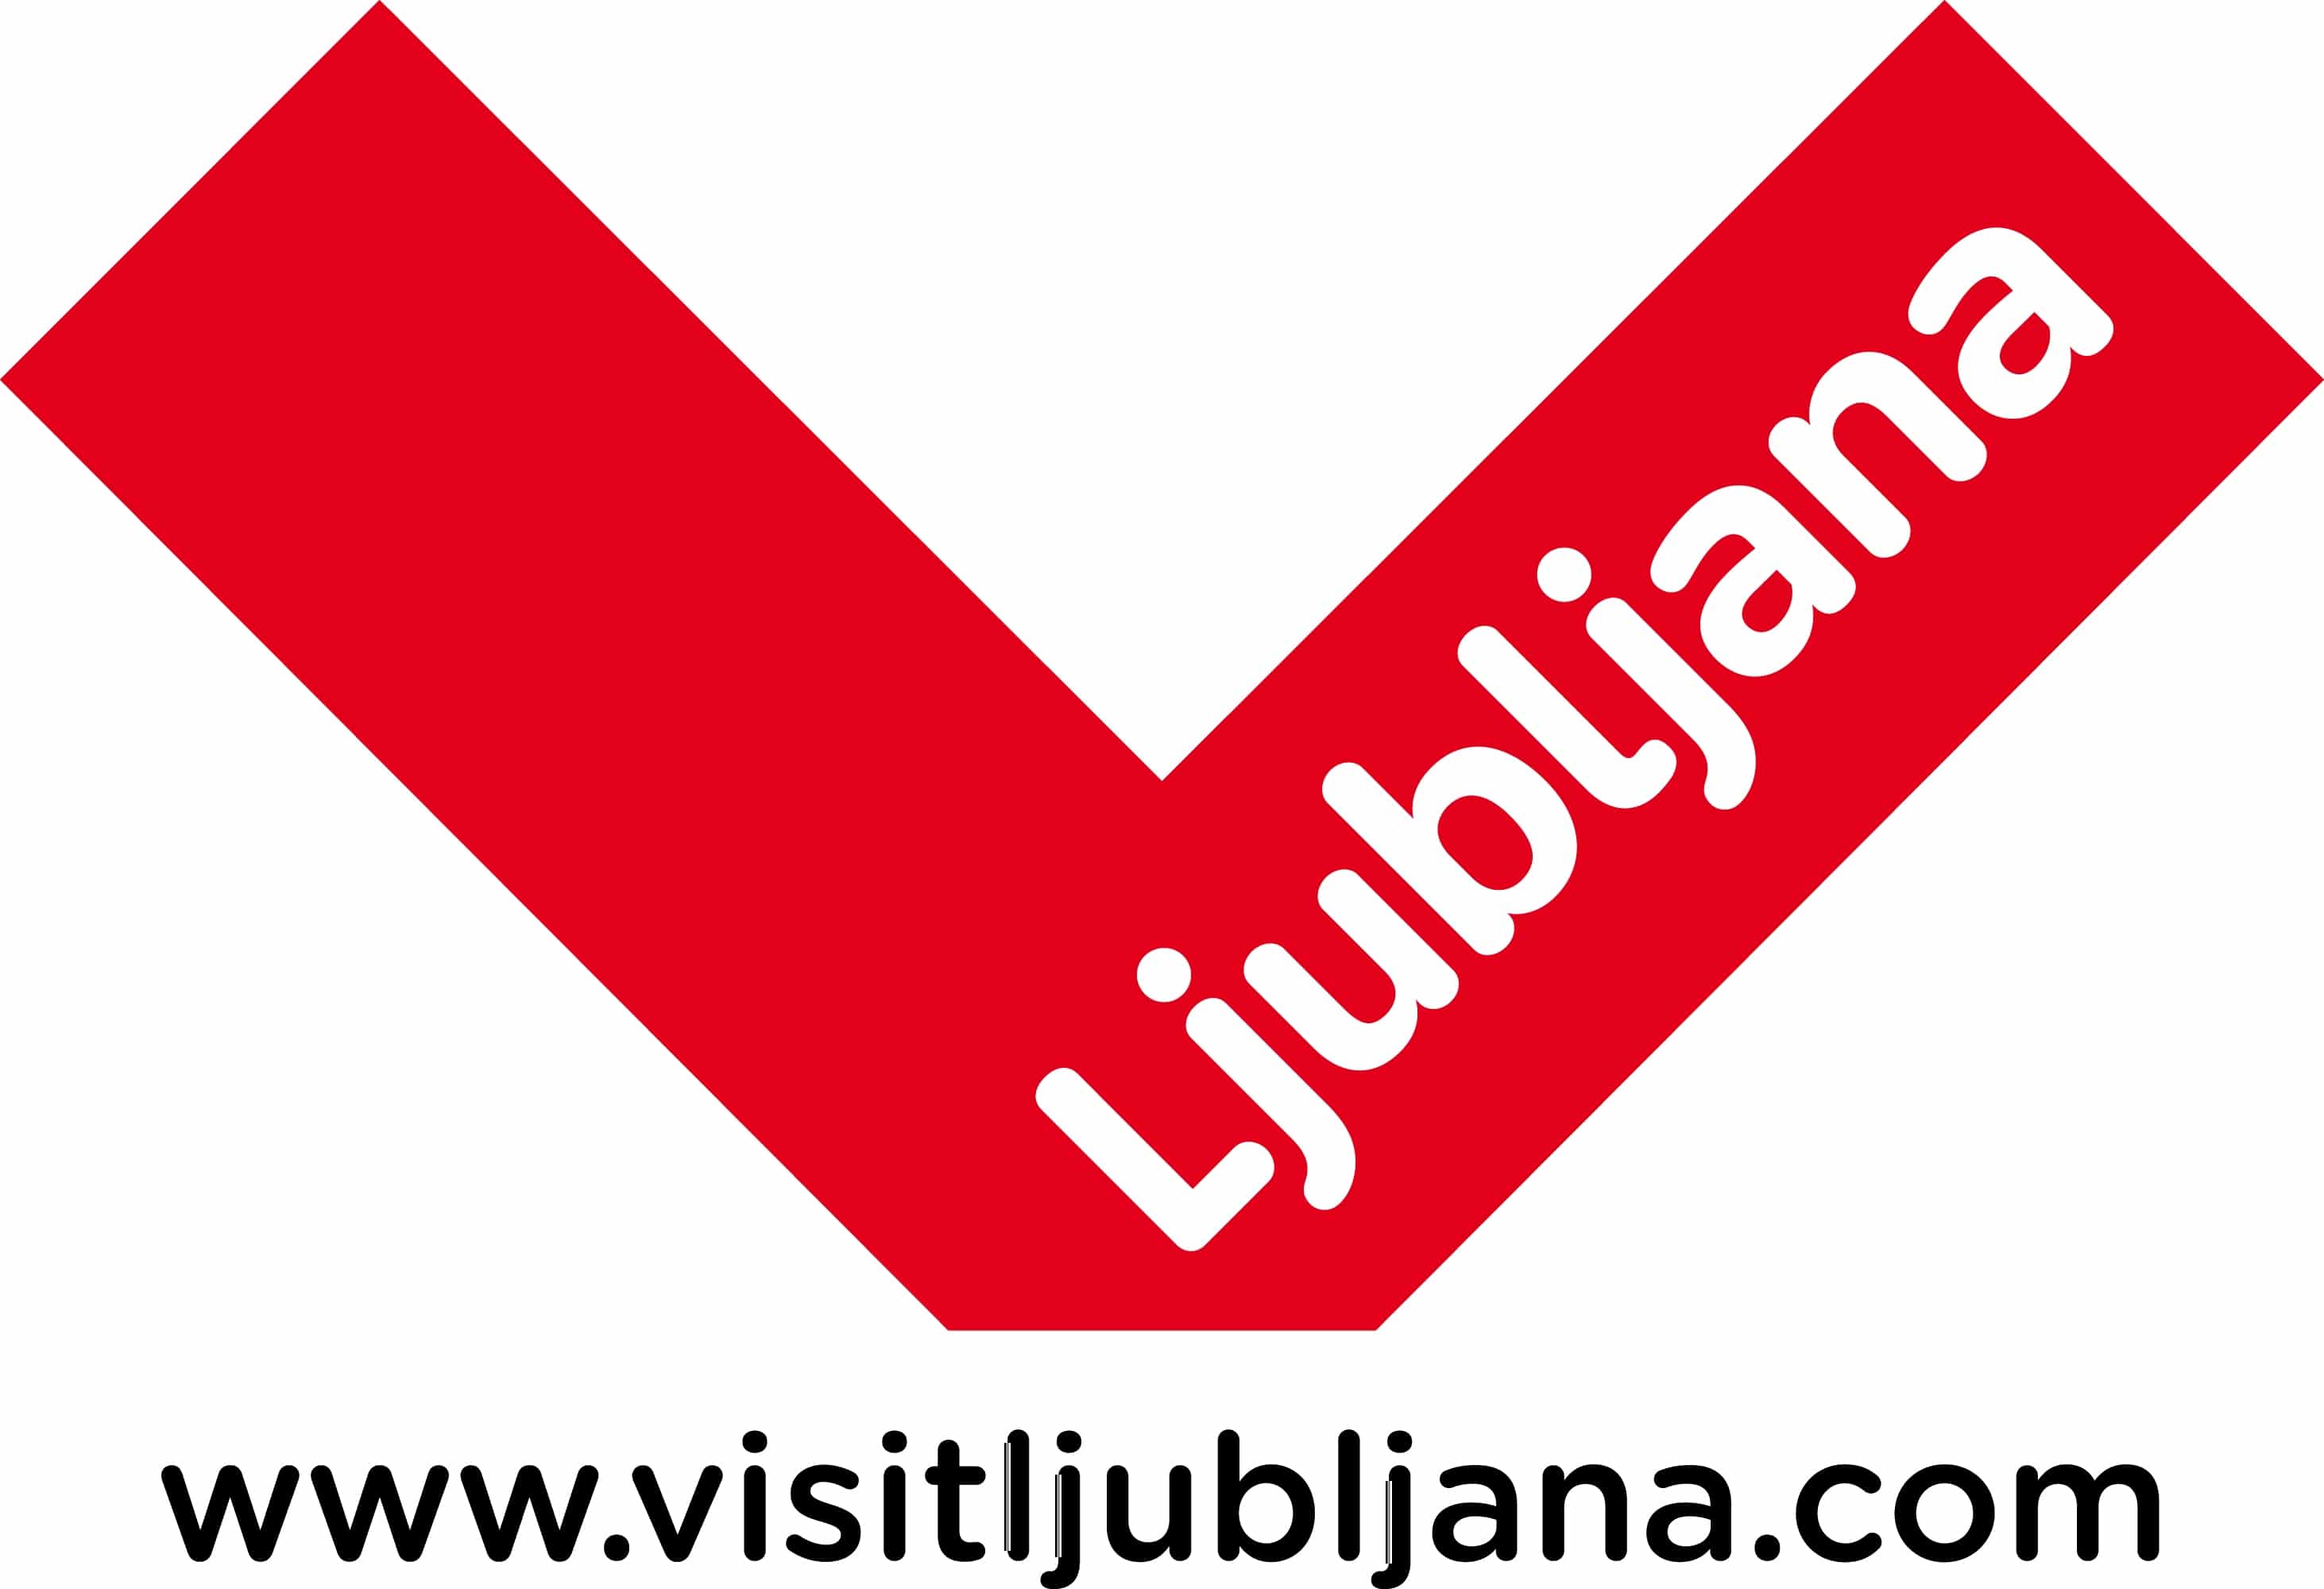 LJUBLJANA TOURISM / CONVENTION BUREAU-image